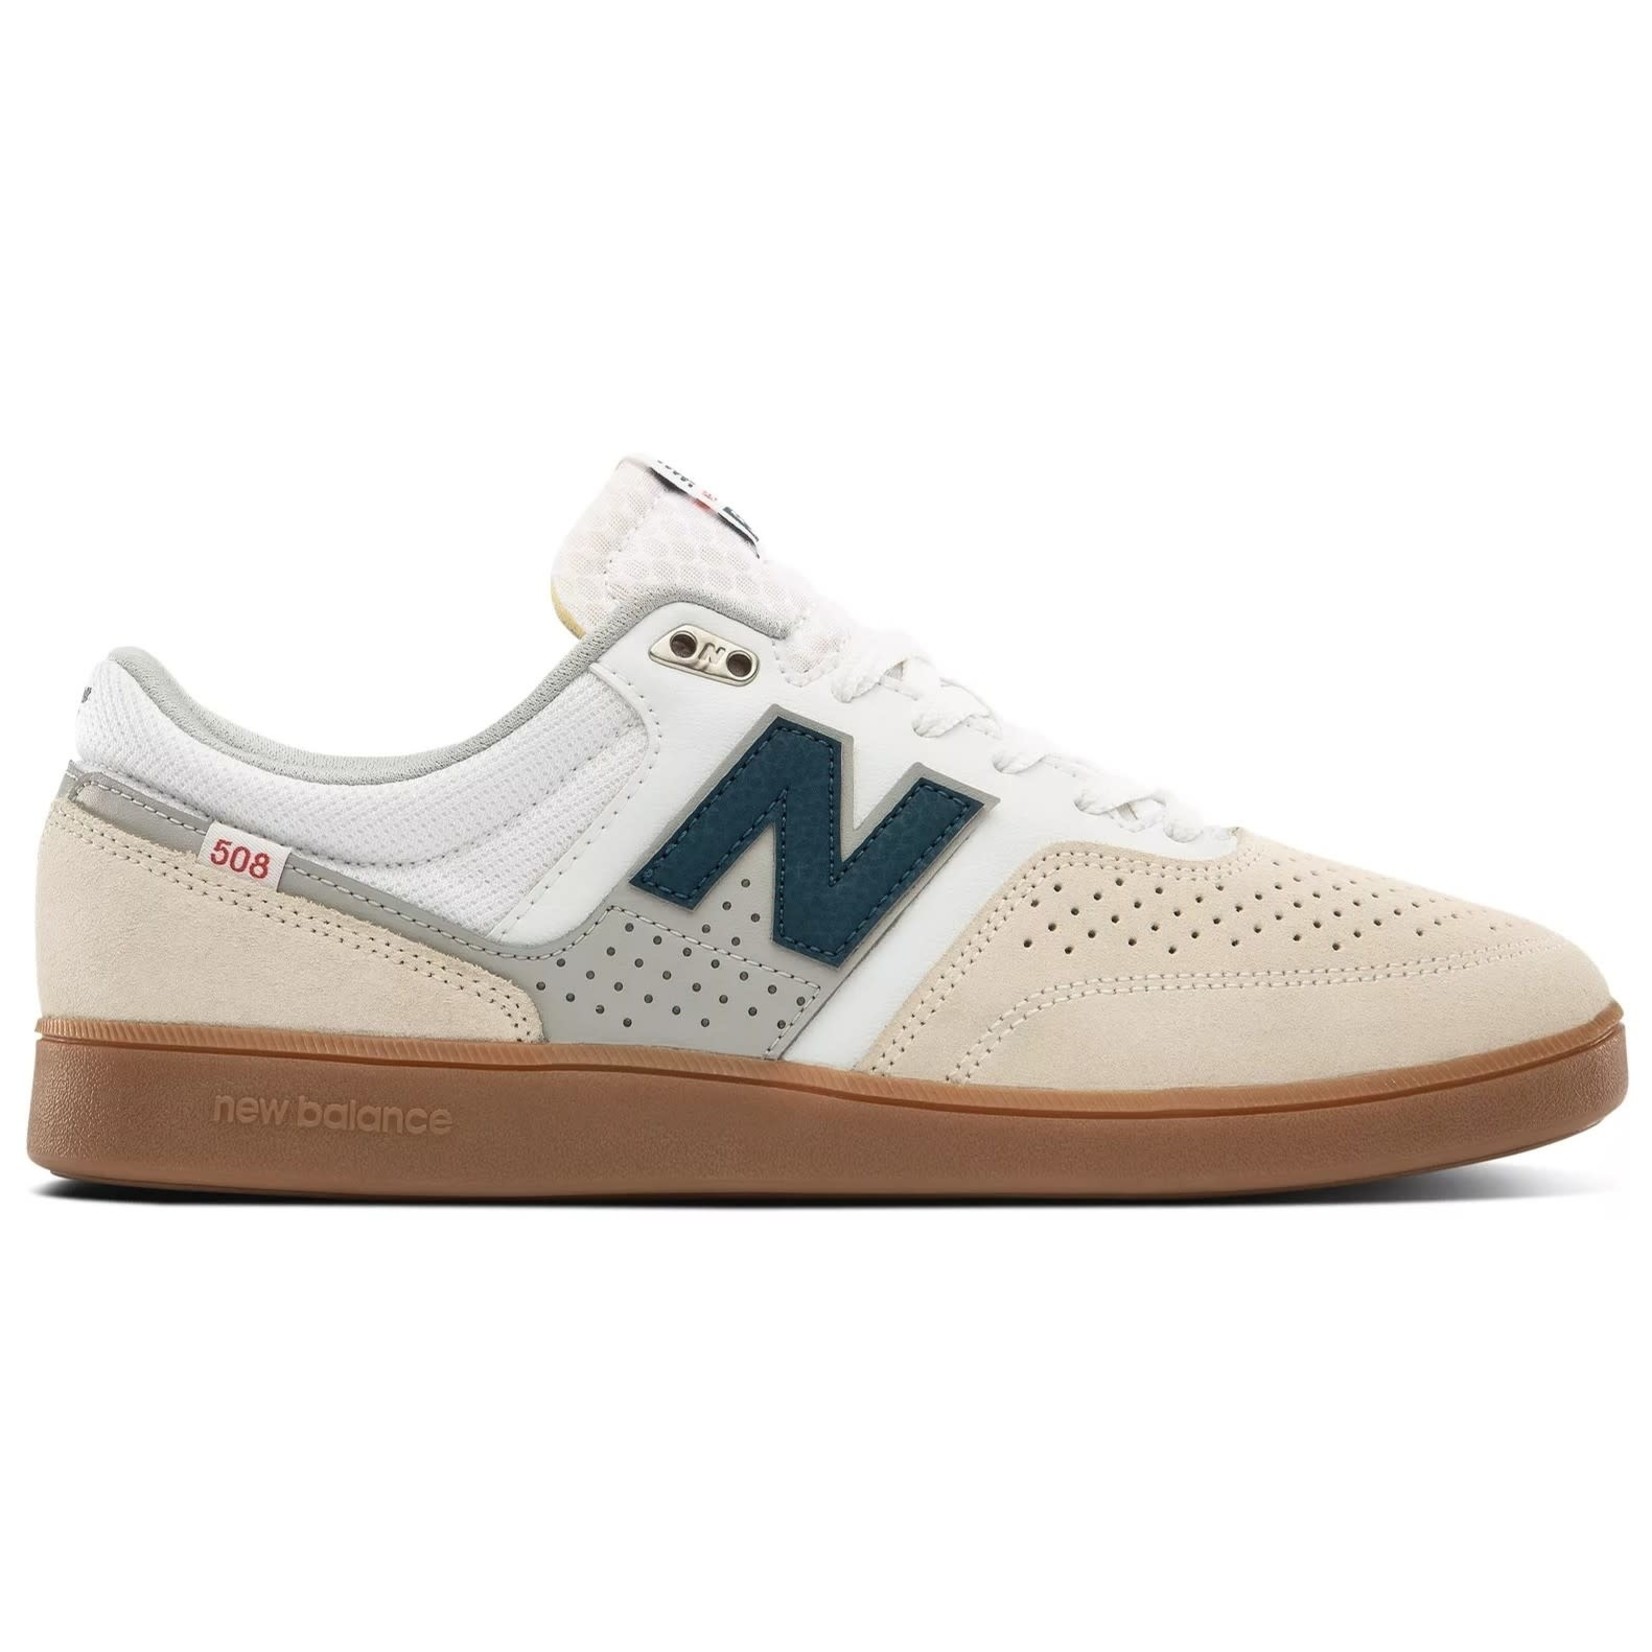 New Balance New Balance 508 Skate Shoes - White/Blue/Gum -